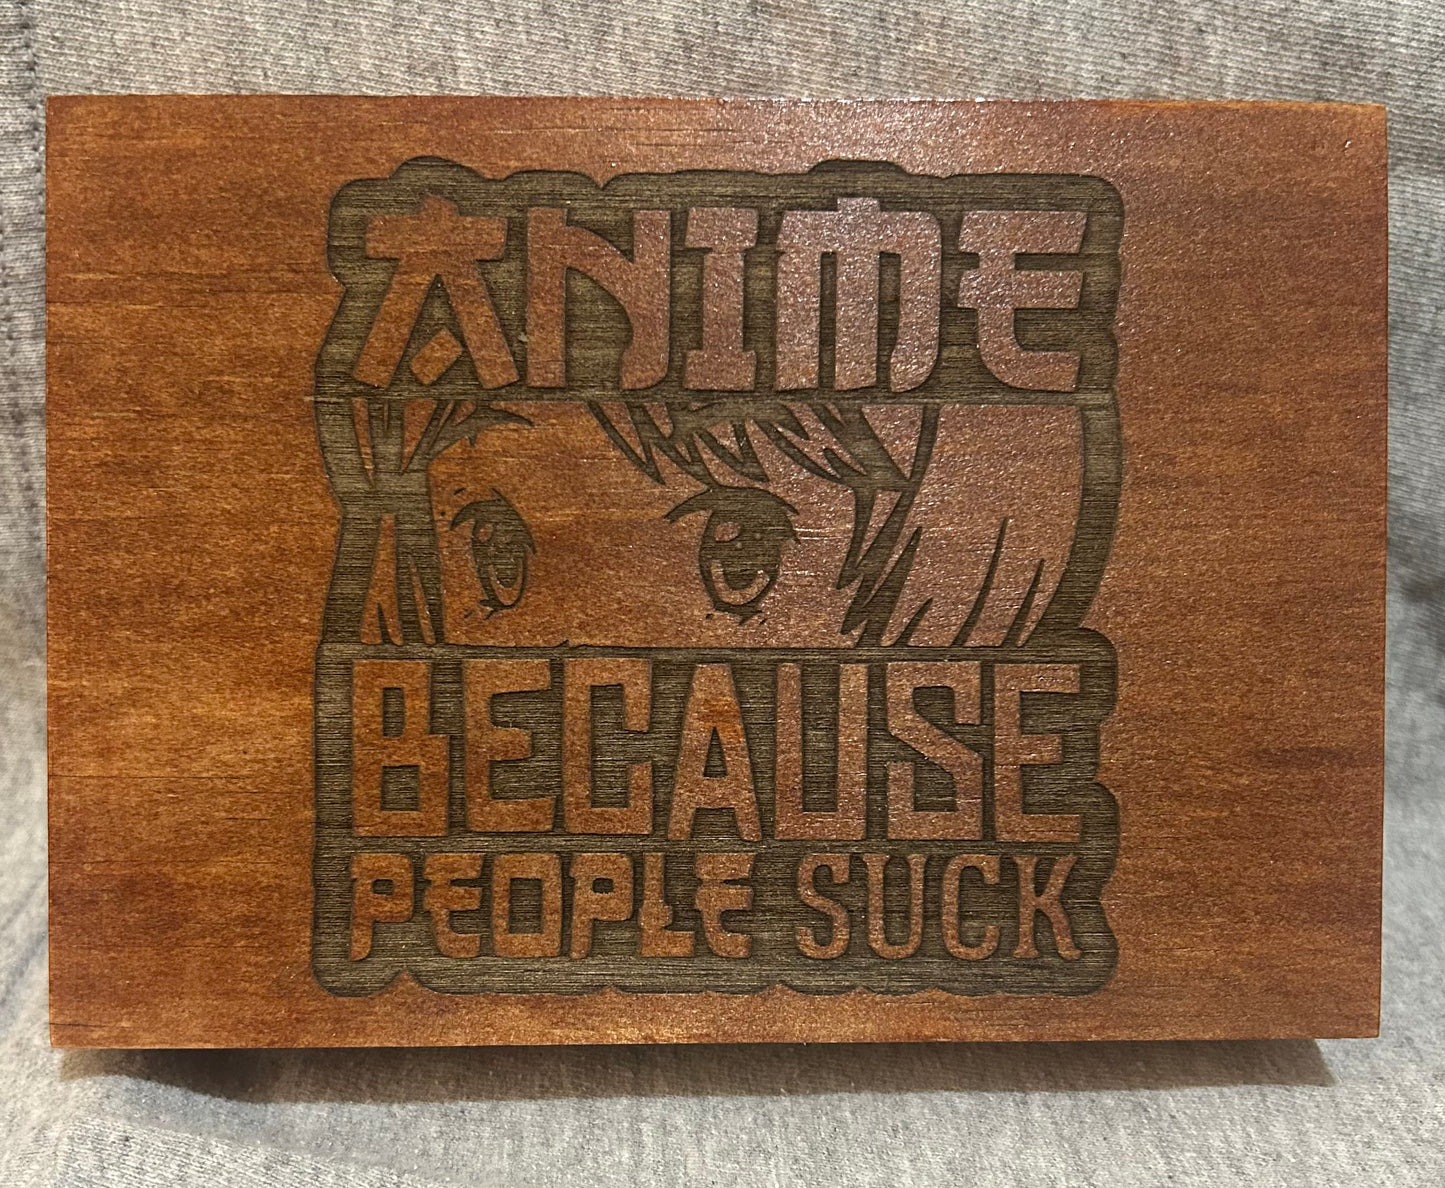 Anime People Suck Box